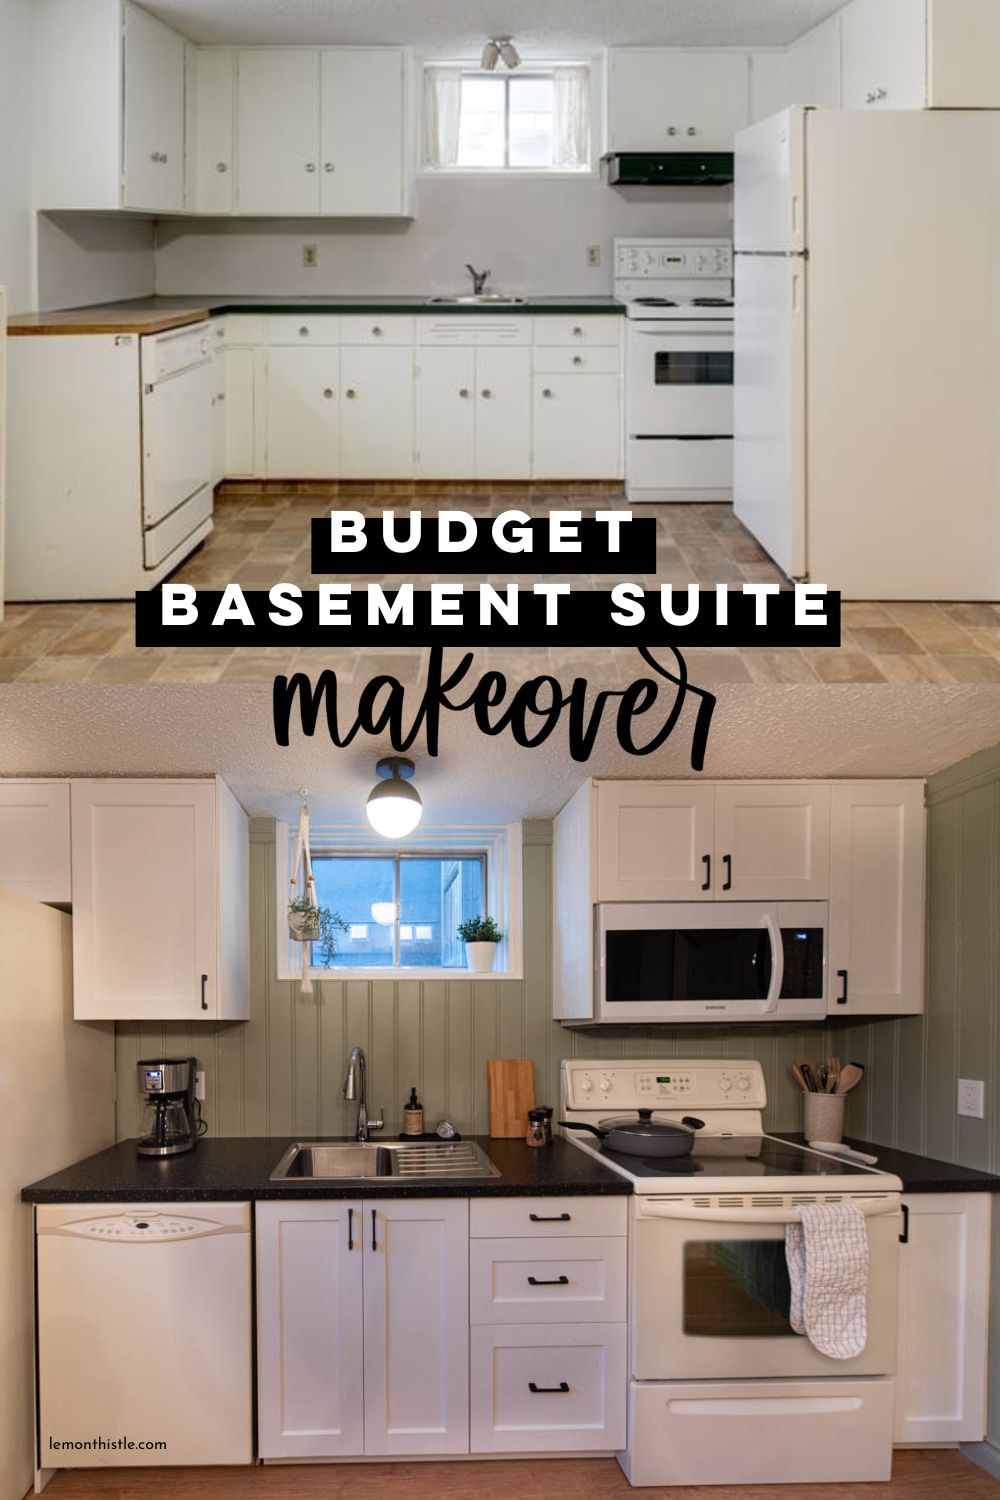 Budget Basement Suite Remodel